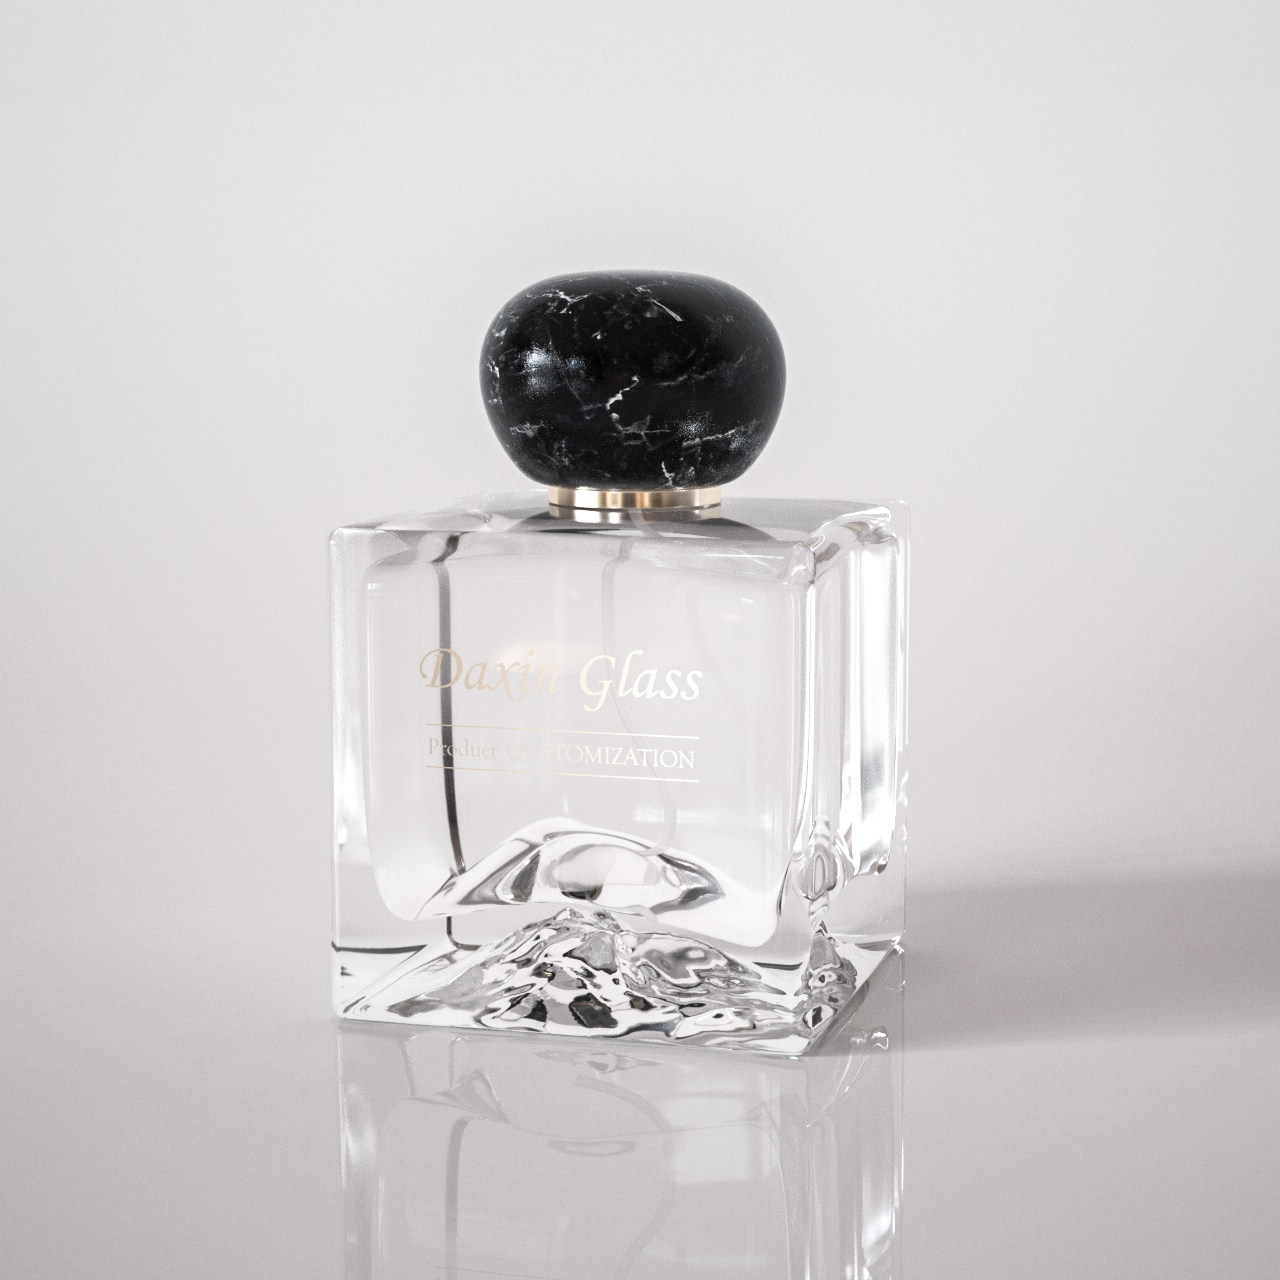 100ml square perfume bottle